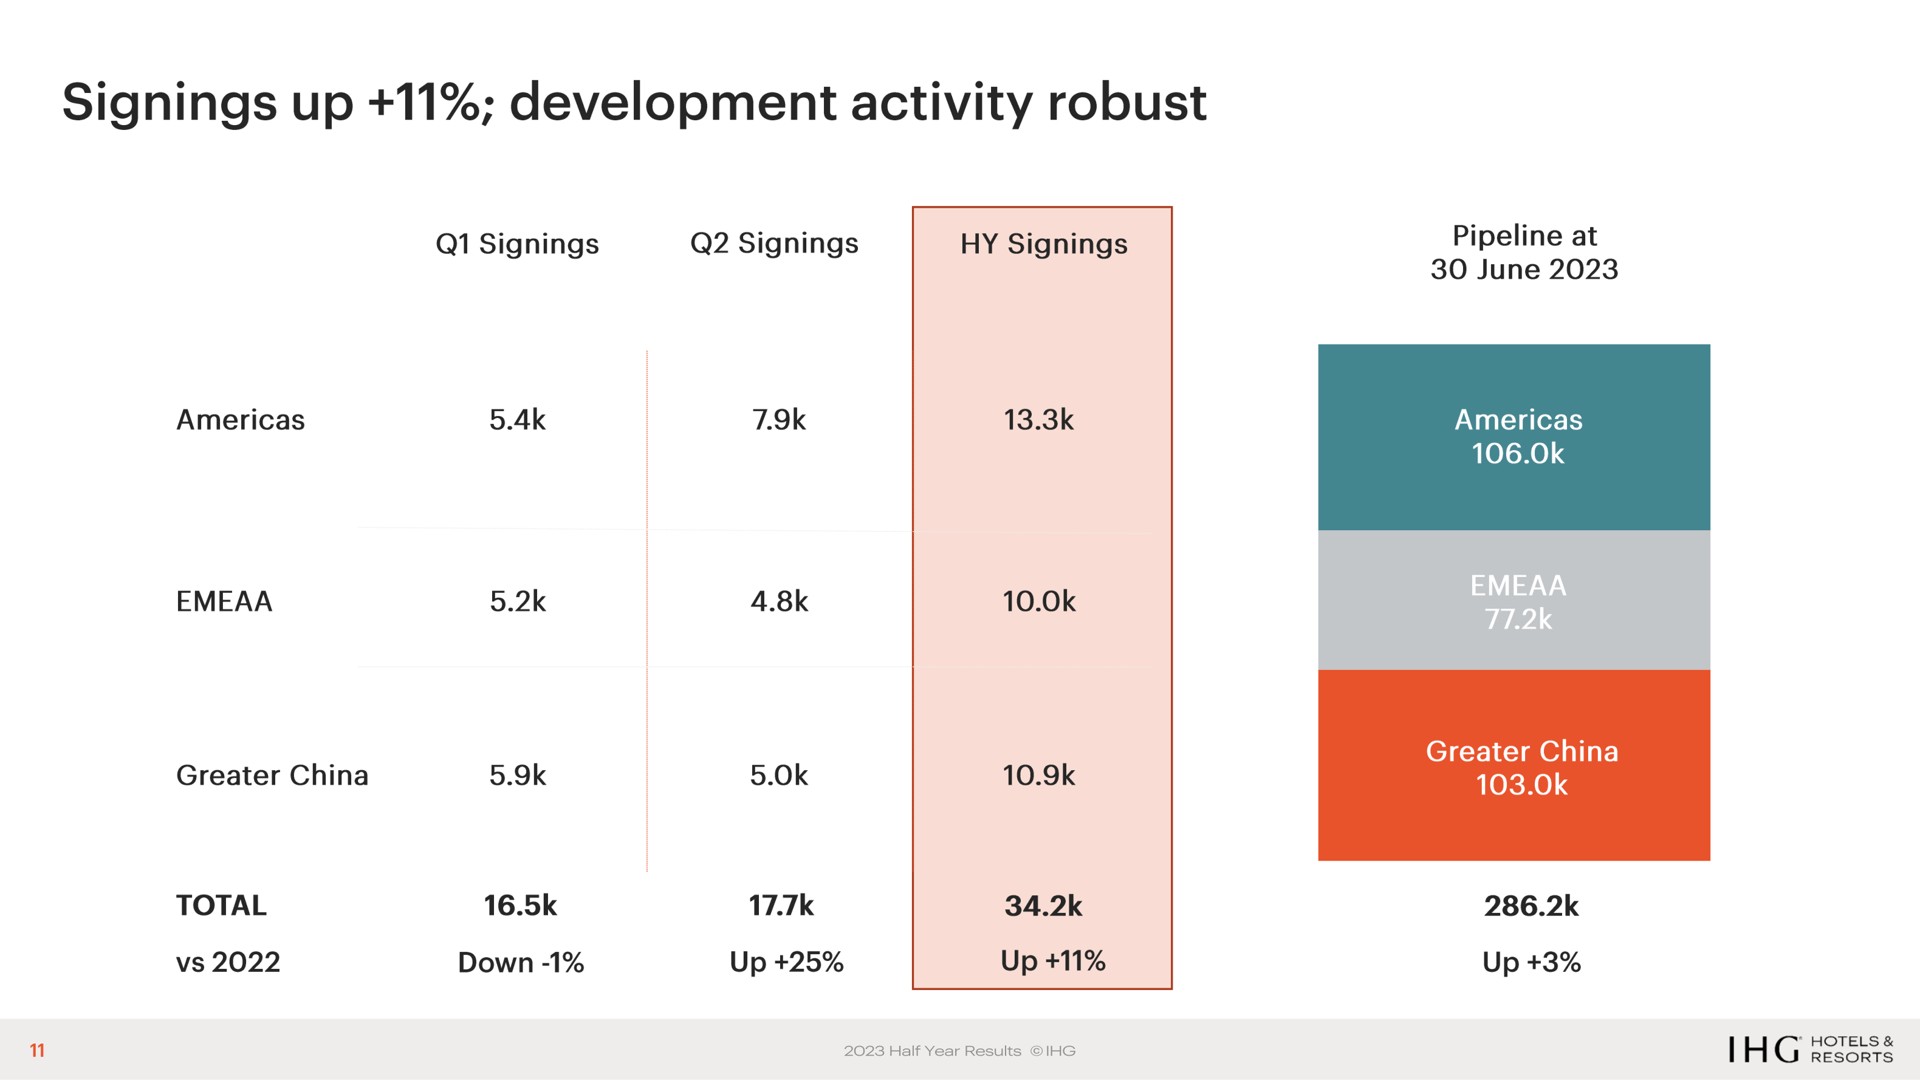 signings up development activity robust | IHG Hotels